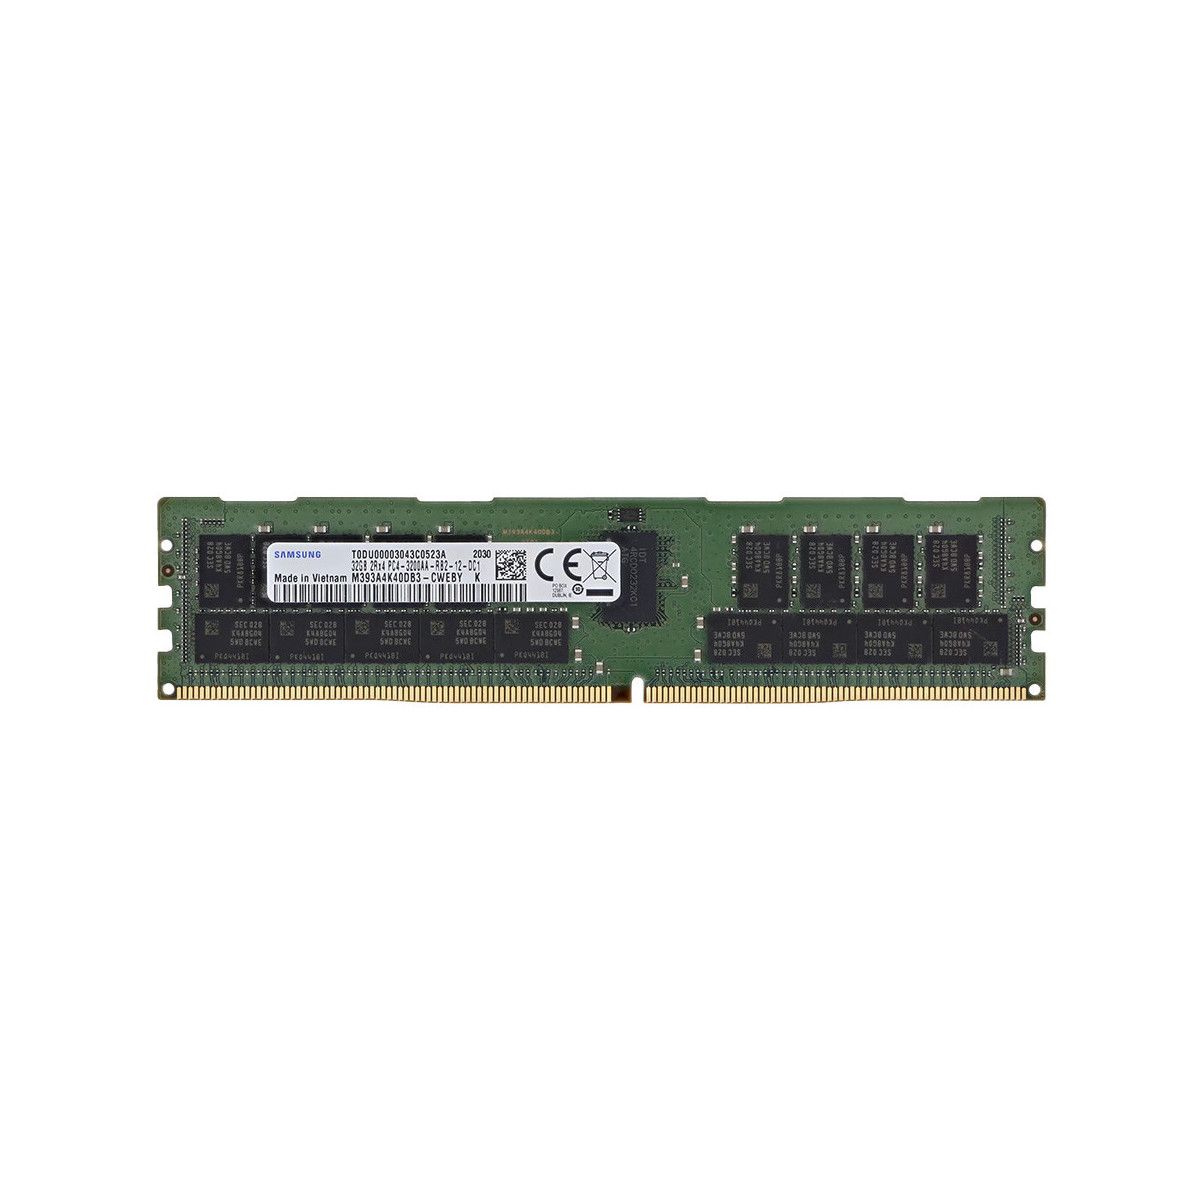 SNP75X1VC/32VXR-MS - Memstar 1x 32GB DDR4-3200 RDIMM PC4-25600R - Memorie OEM compatibilă Mem-Star 1 - Memstar 